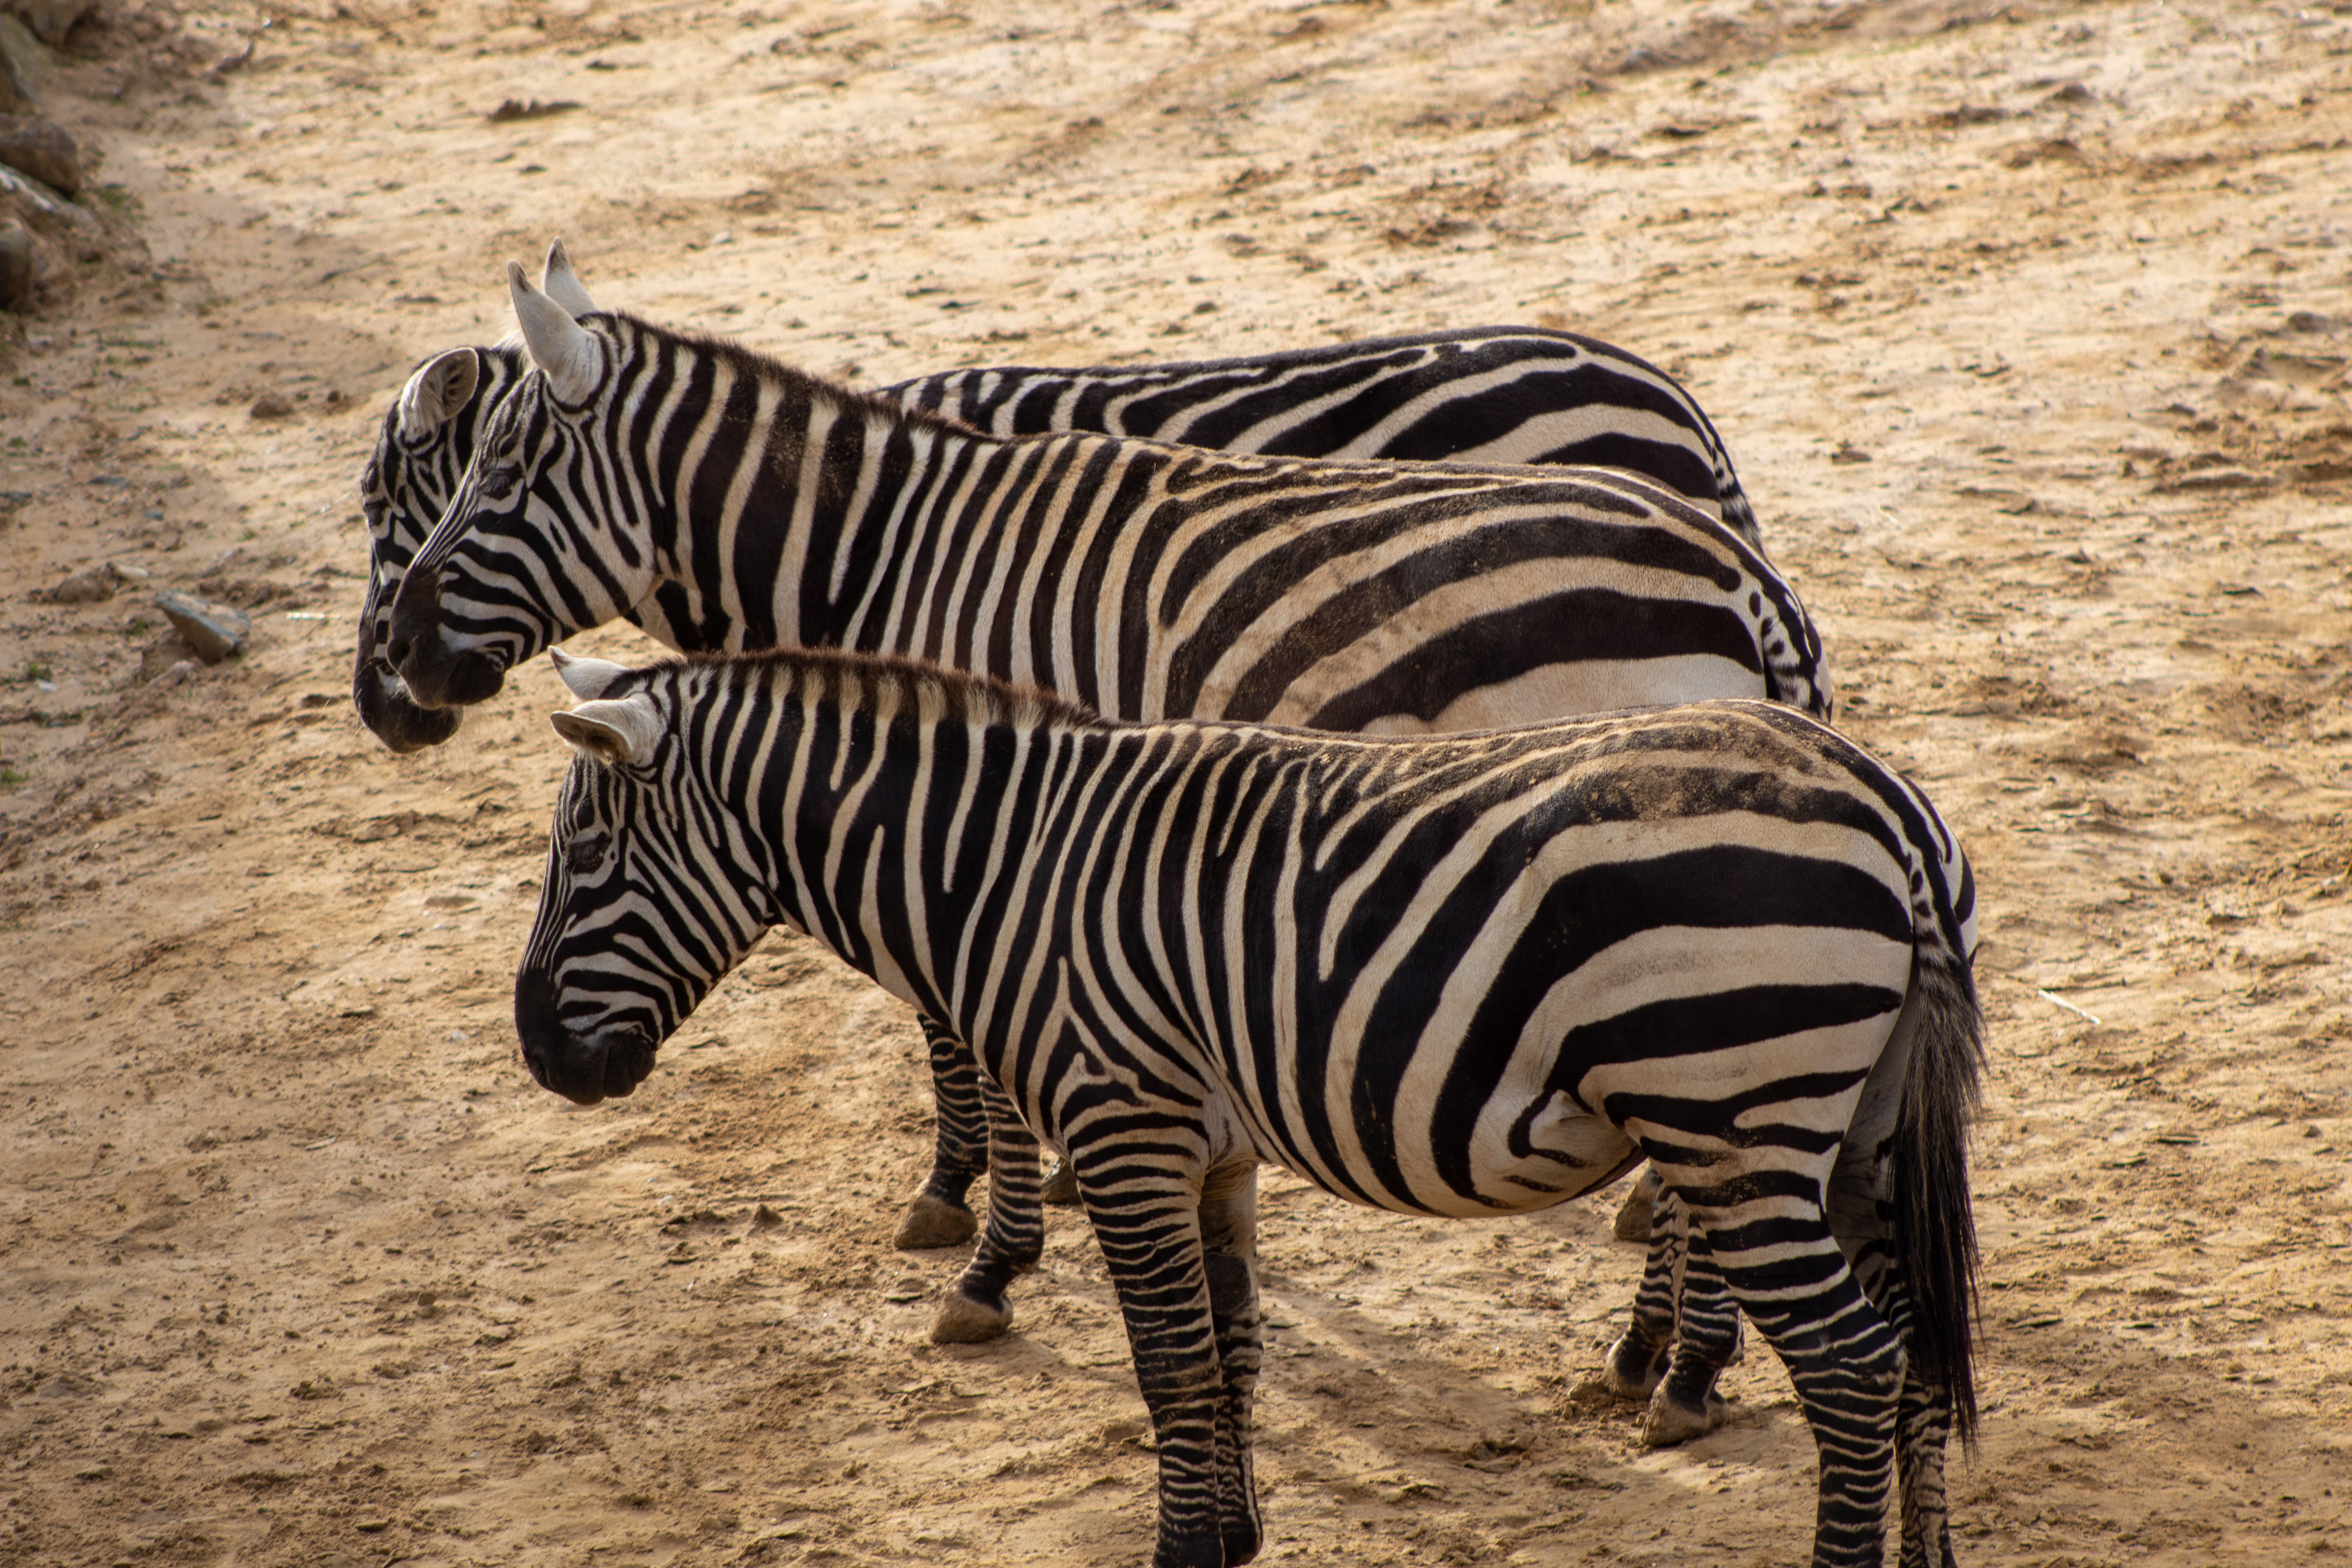 Why do Zebra's have black and white stripes?